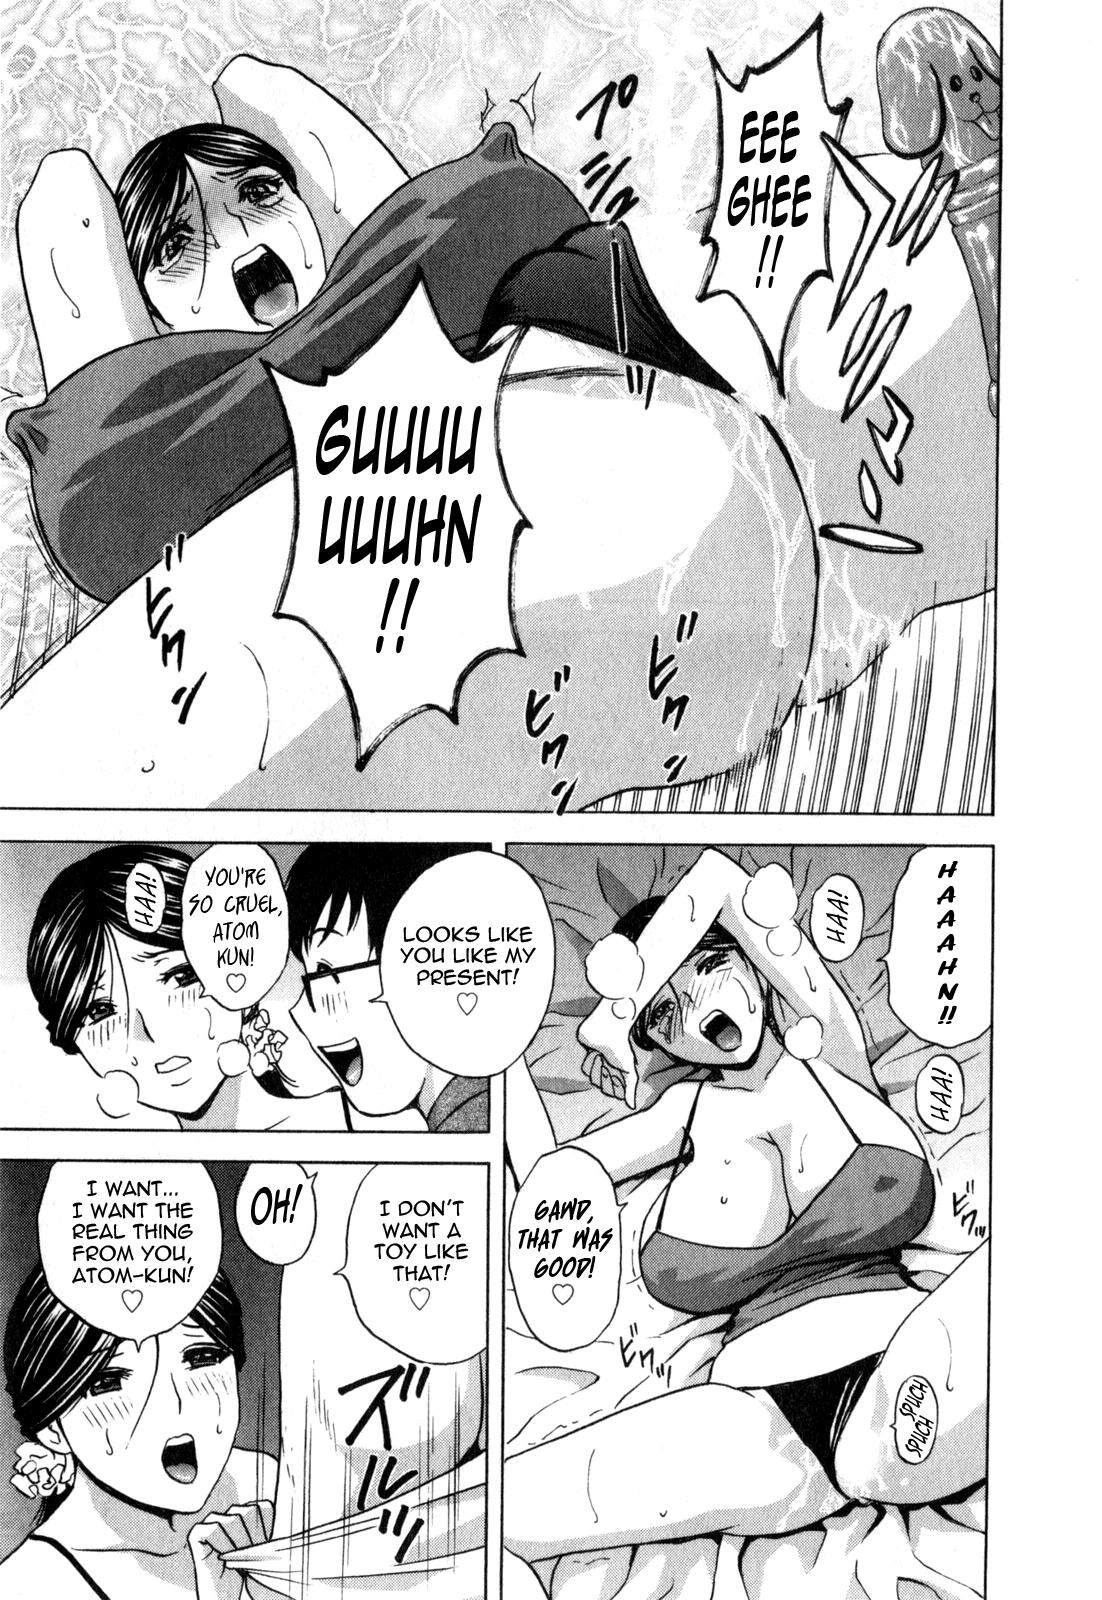 [Hidemaru] Life with Married Women Just Like a Manga 3 - Ch. 1-2 [English] {Tadanohito} 20